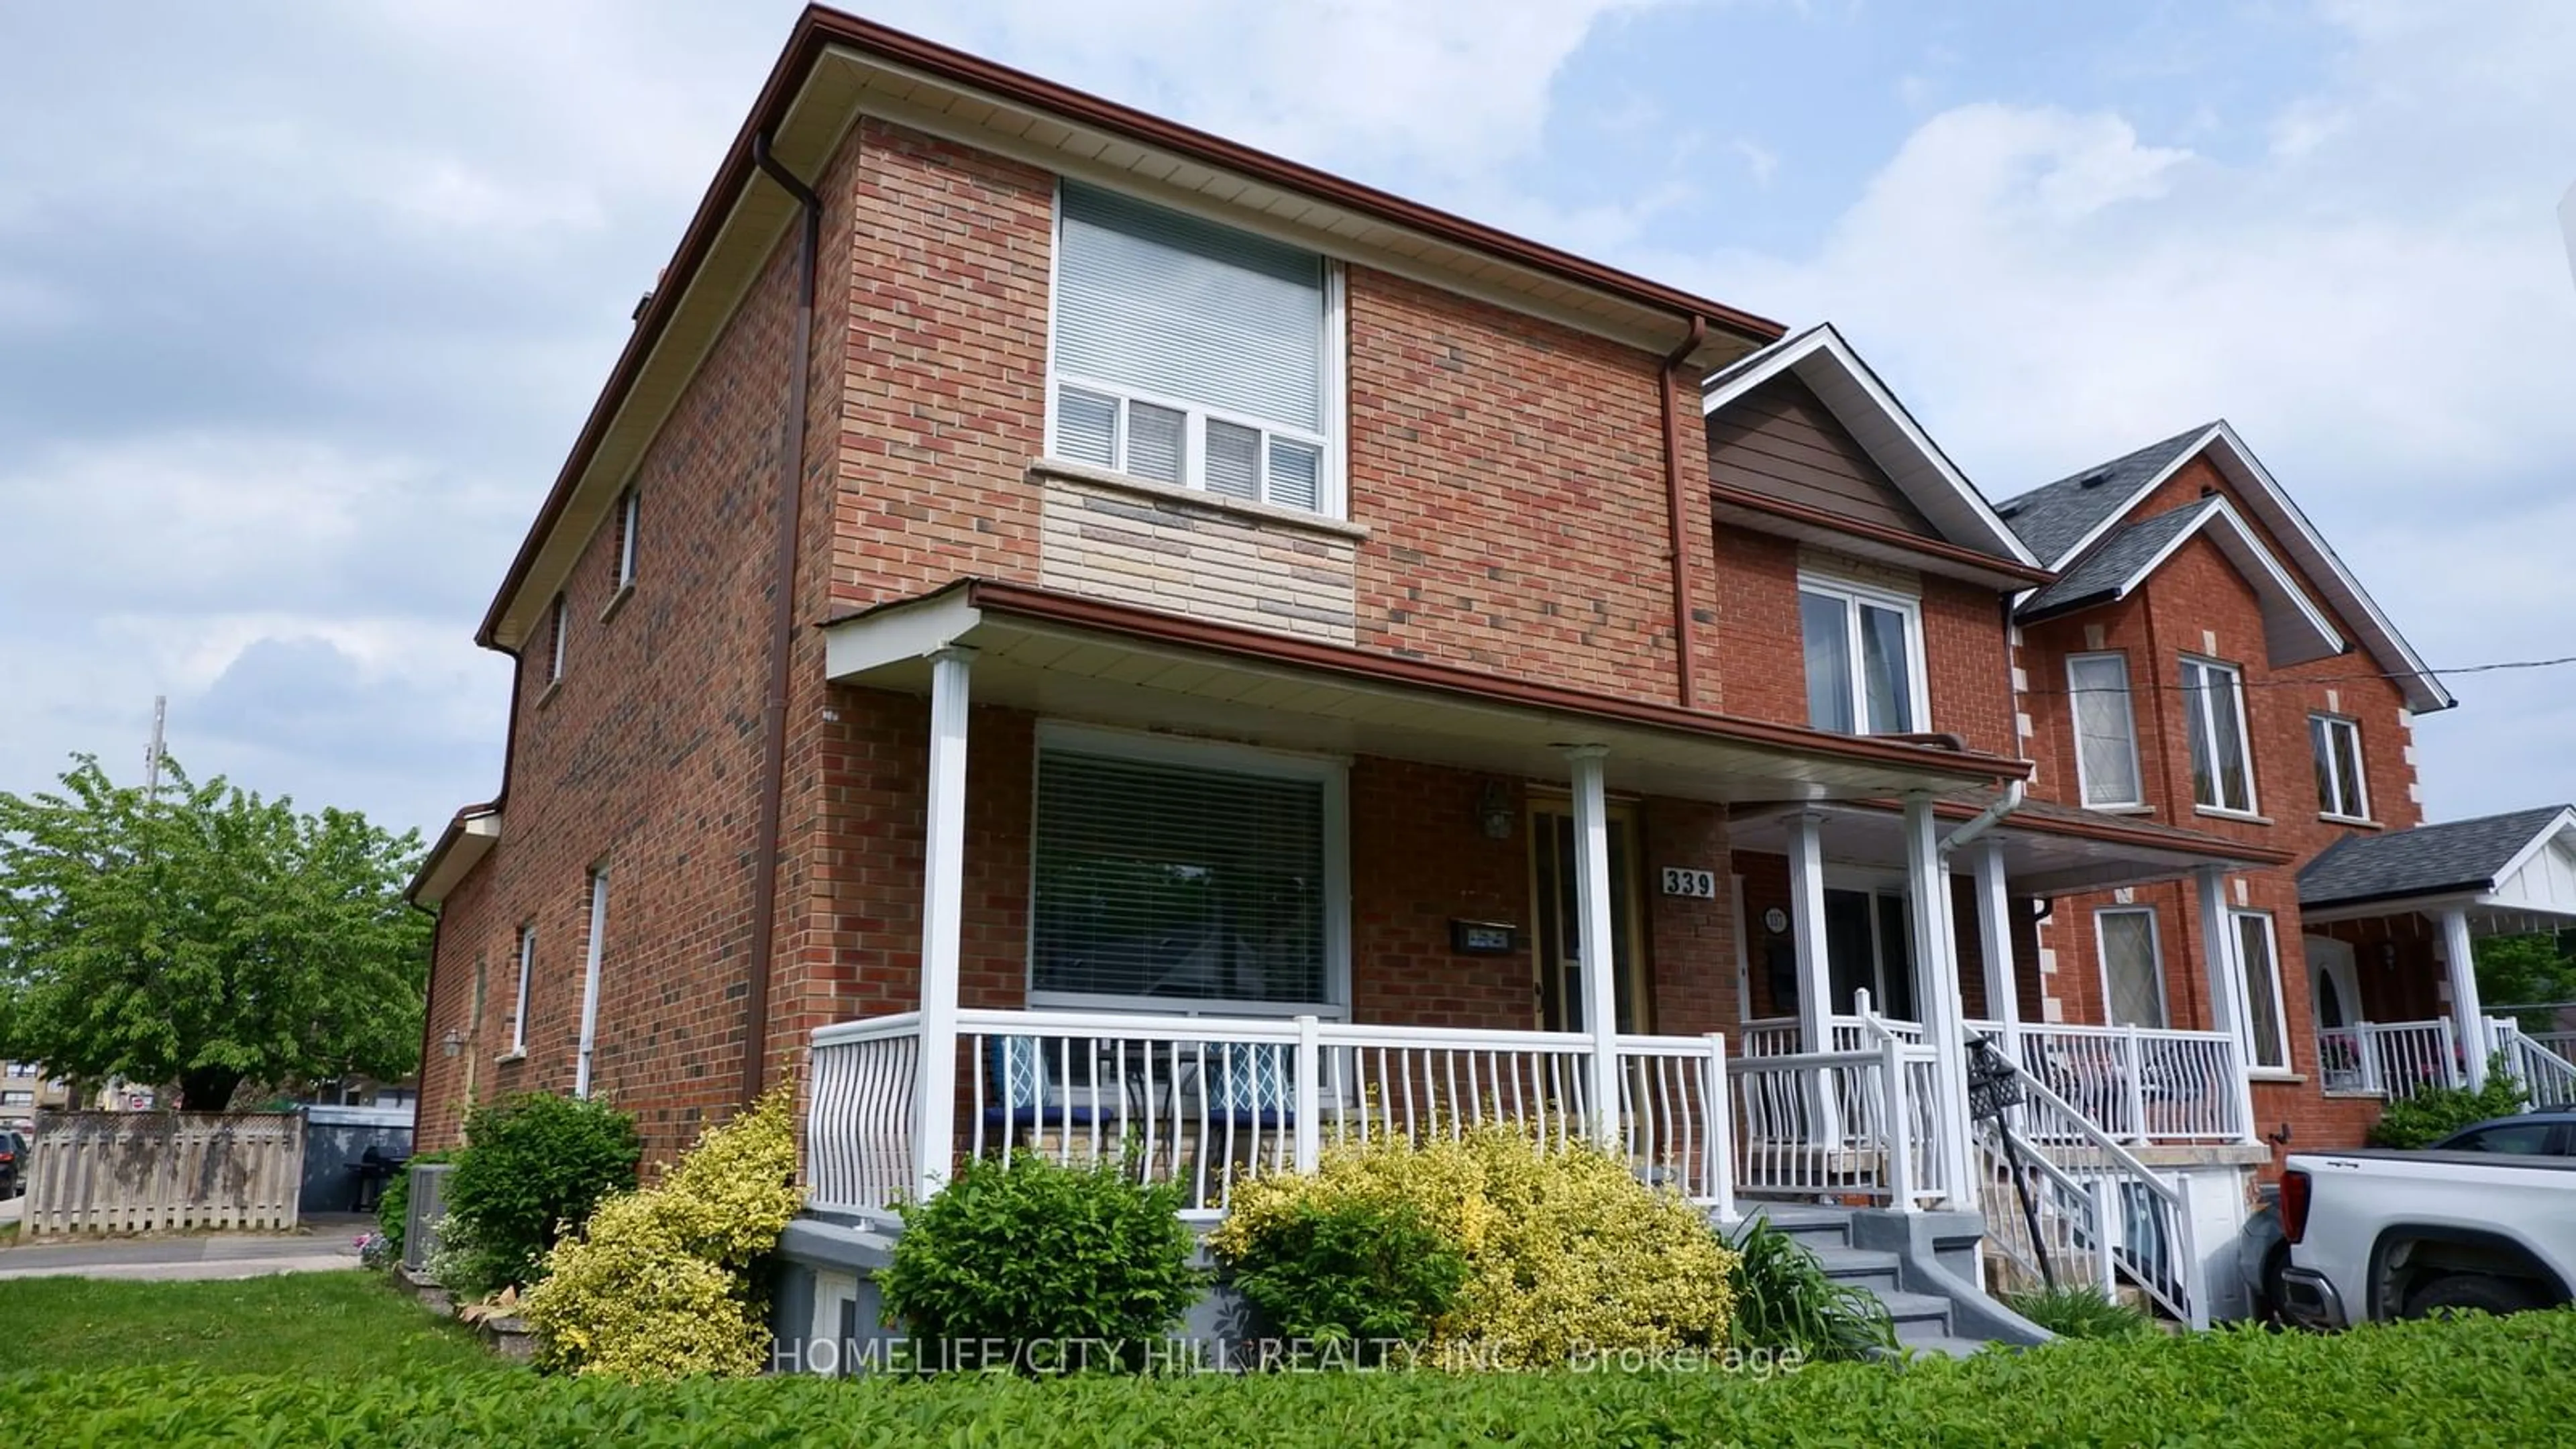 Home with brick exterior material for 339 Harvie Ave, Toronto Ontario M6E 4L4